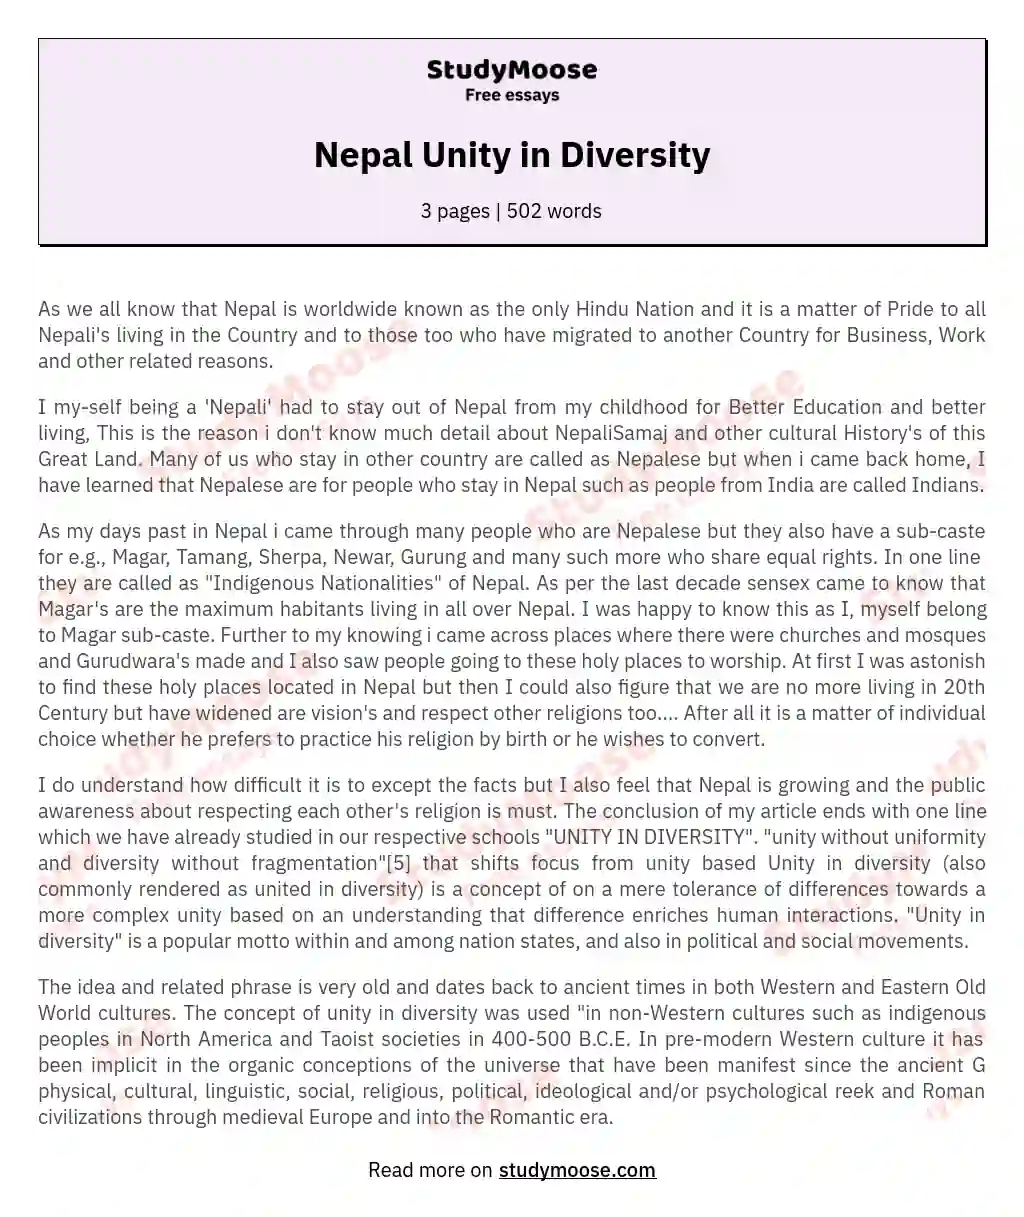 Nepal Unity in Diversity essay